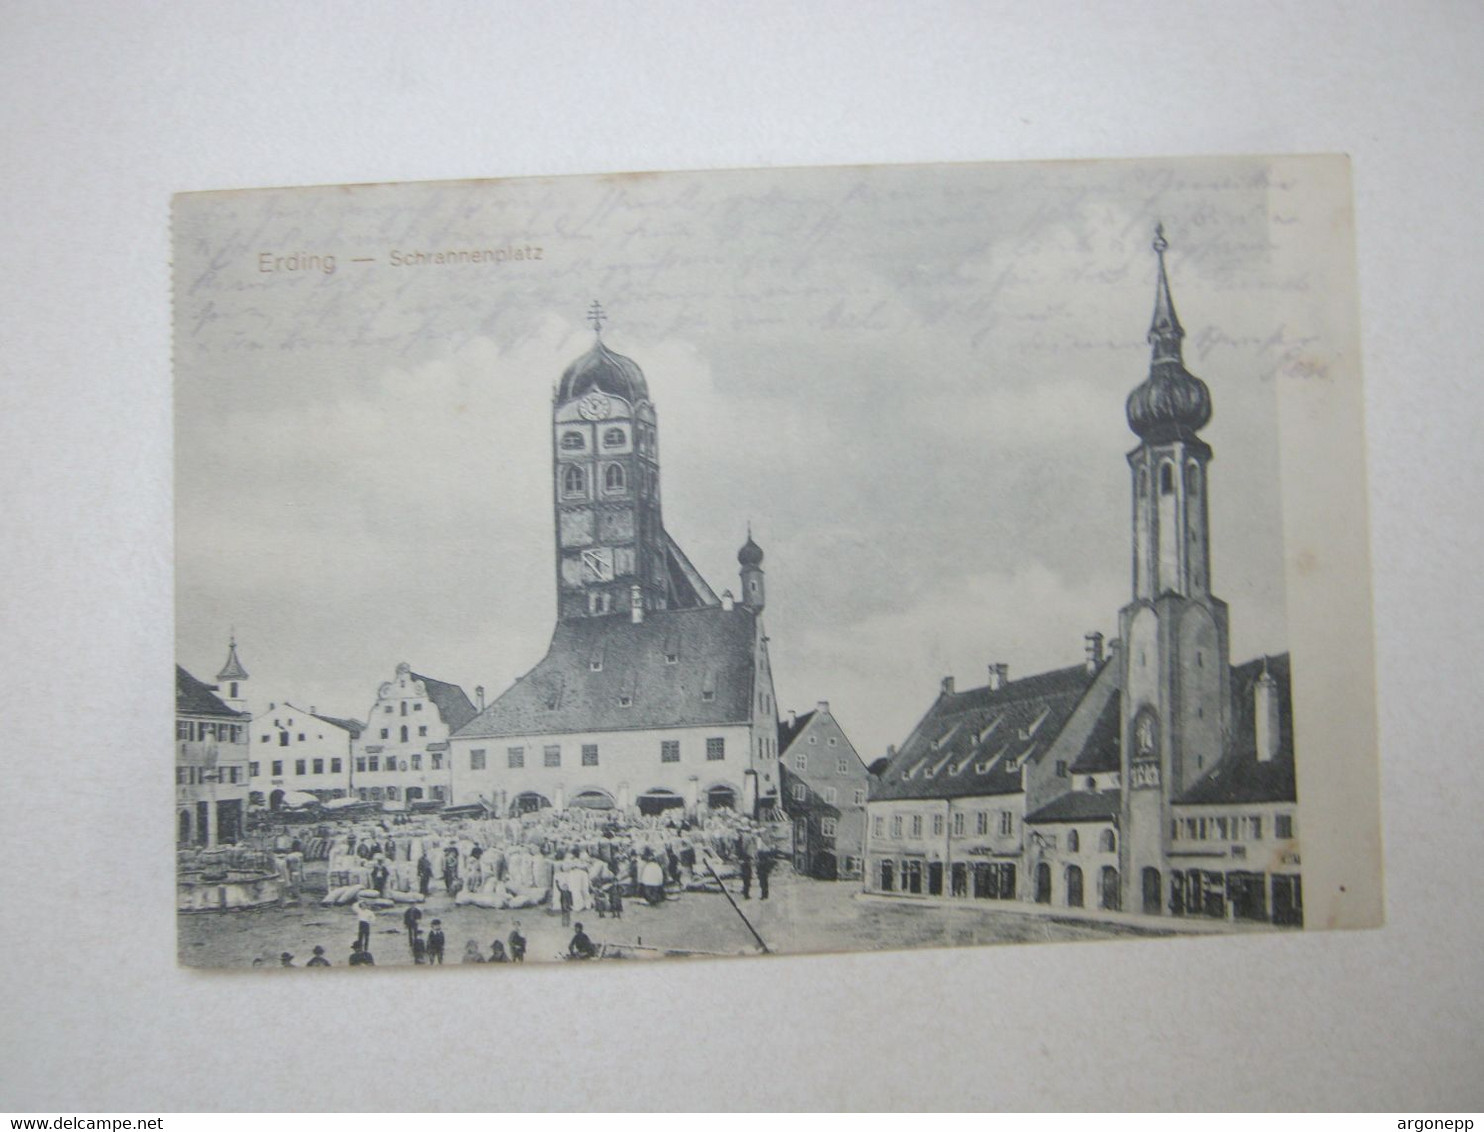 ERDING  , Schöne Karte Um 1921 - Erding